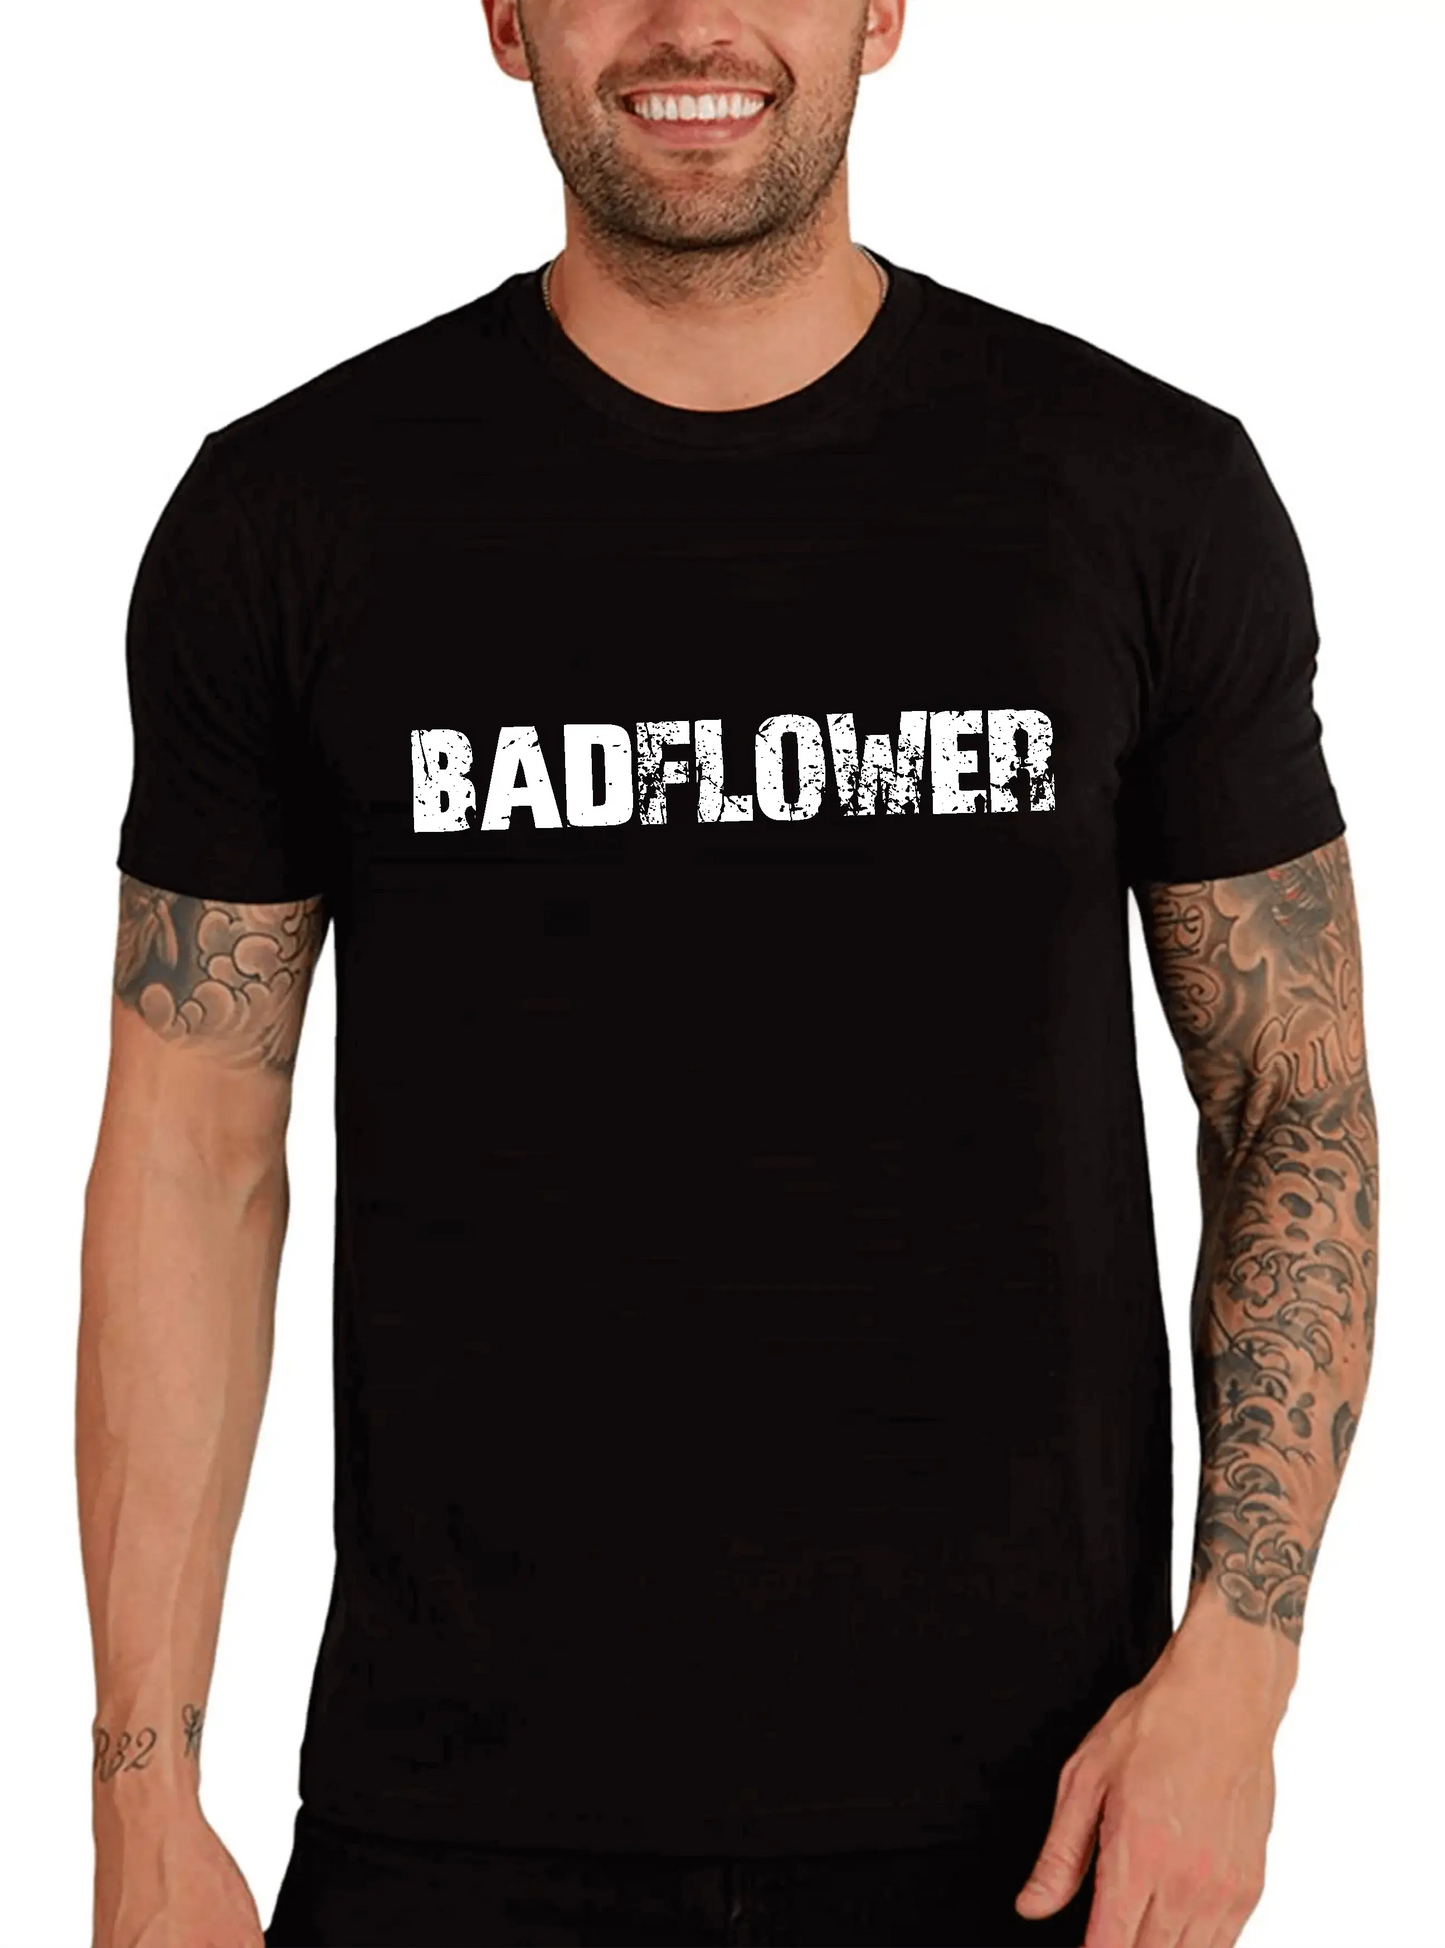 Men's Graphic T-Shirt Badflower Eco-Friendly Limited Edition Short Sleeve Tee-Shirt Vintage Birthday Gift Novelty